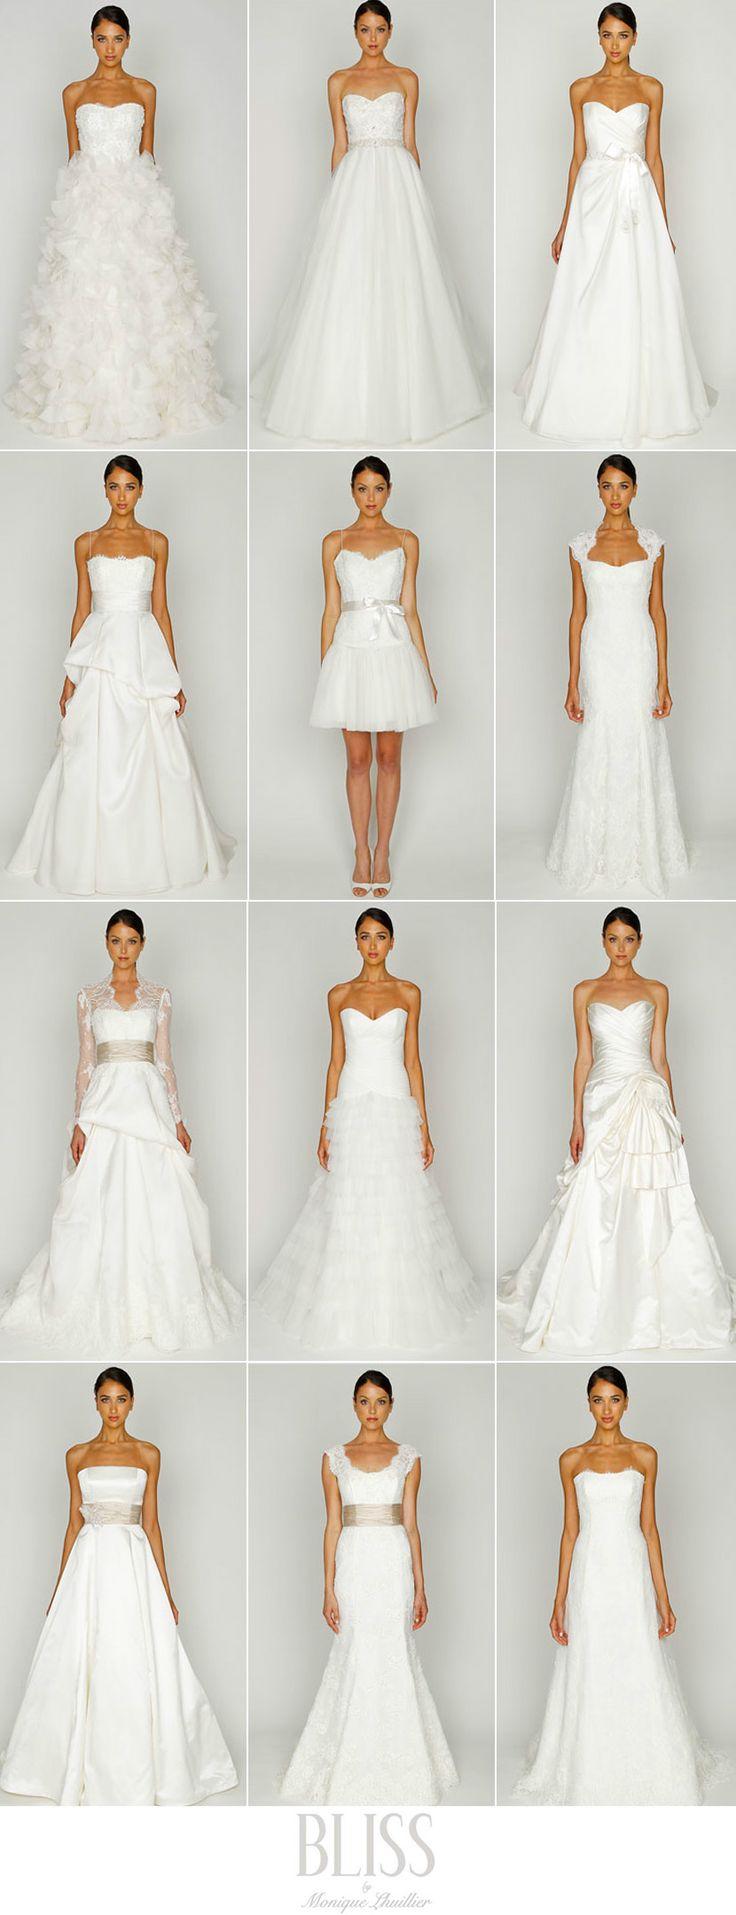 زفاف - Wedding Dress Shapes - Good Guide To Look At Before You Go Hunting For Your Wedding Dress